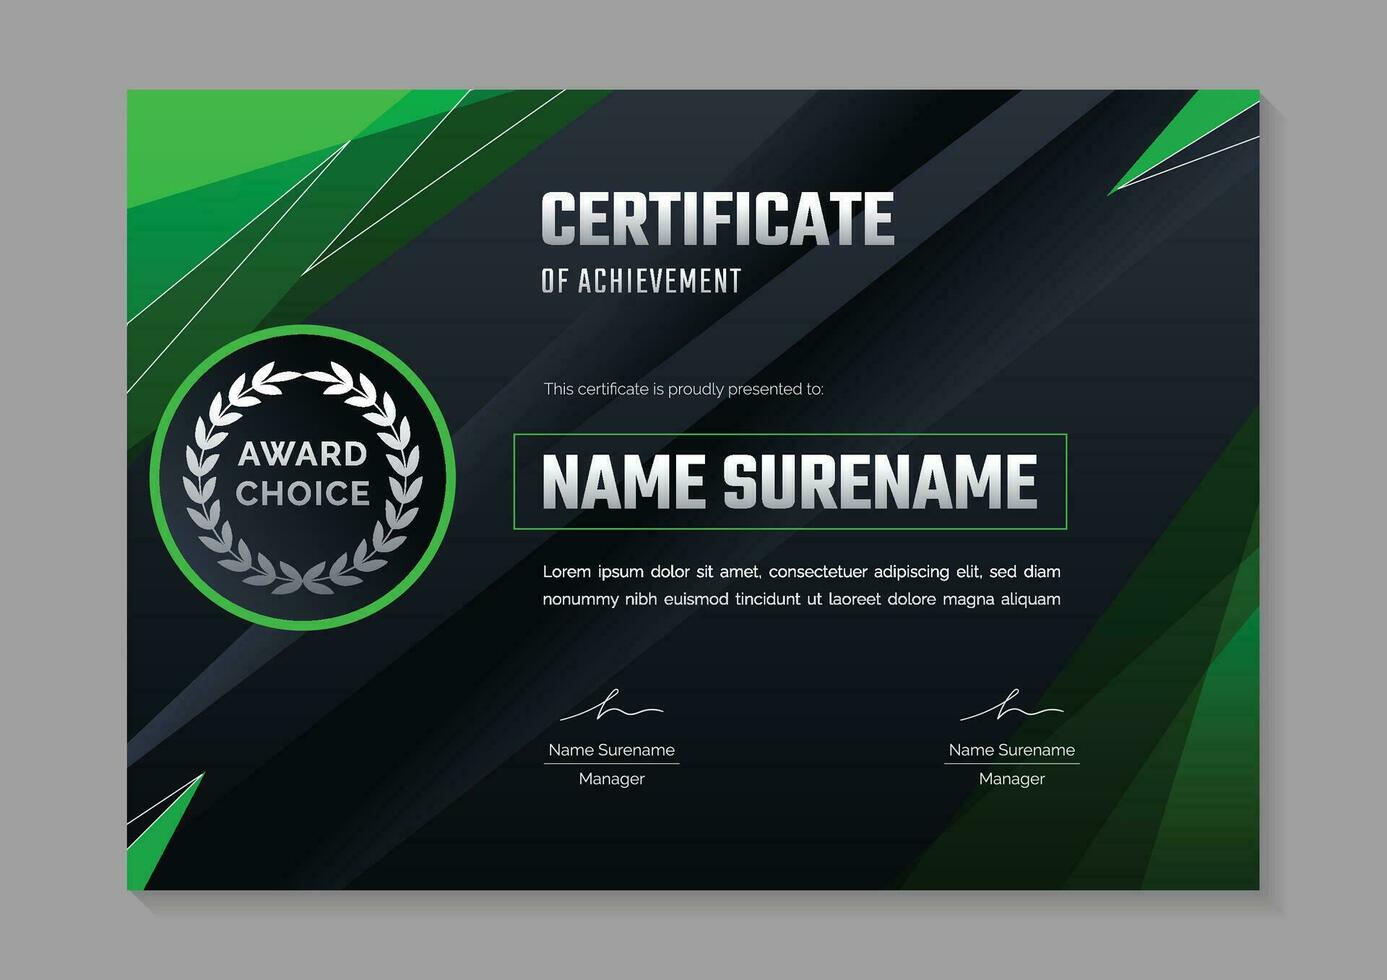 verde certificado de logro modelo diseño para juego competencia vector